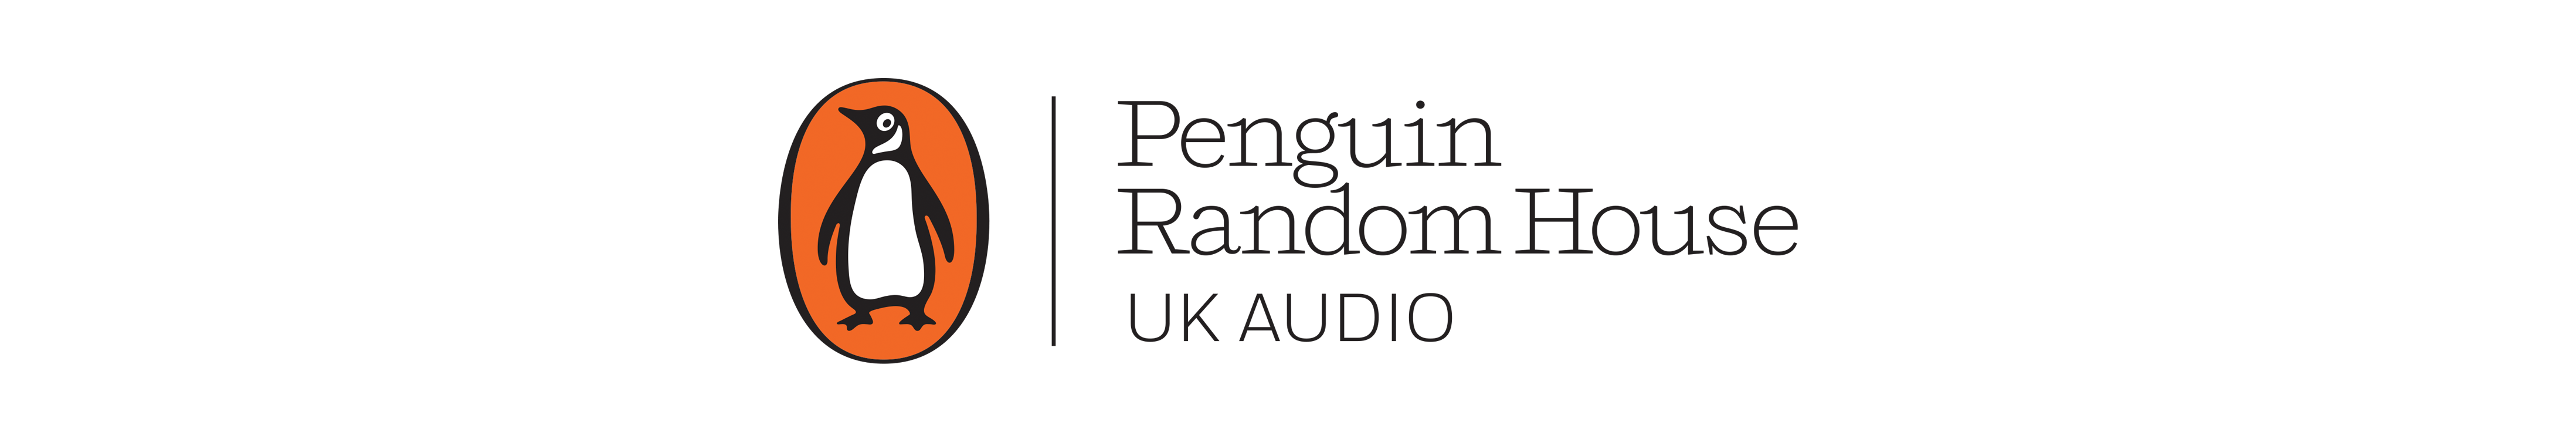 Penguin Random House Audio logo